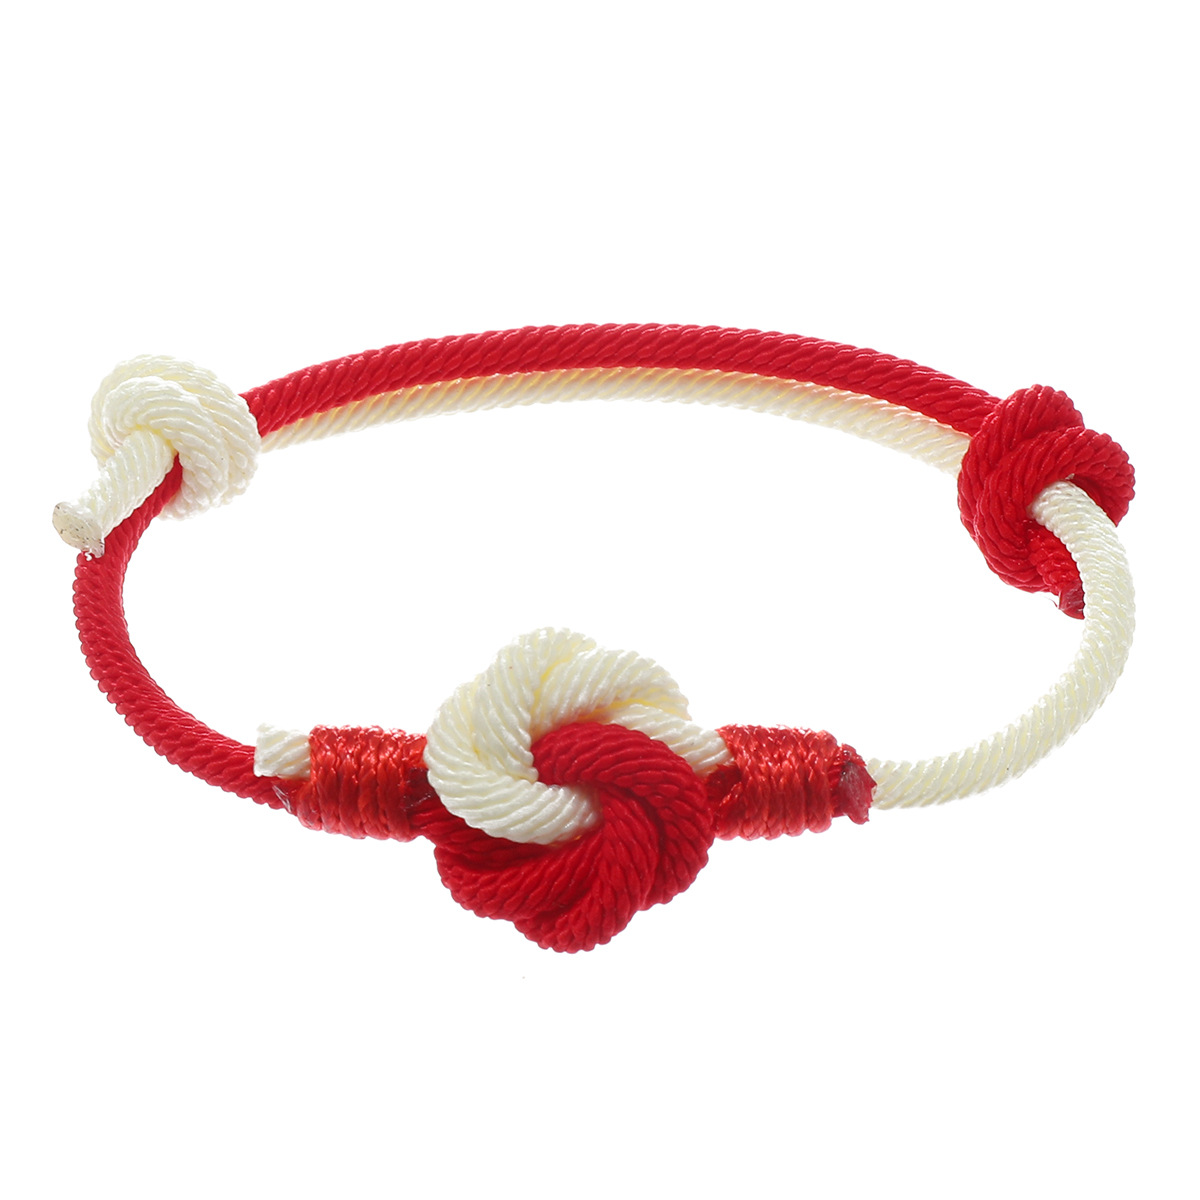 1:Red   beige (Mandala knot)